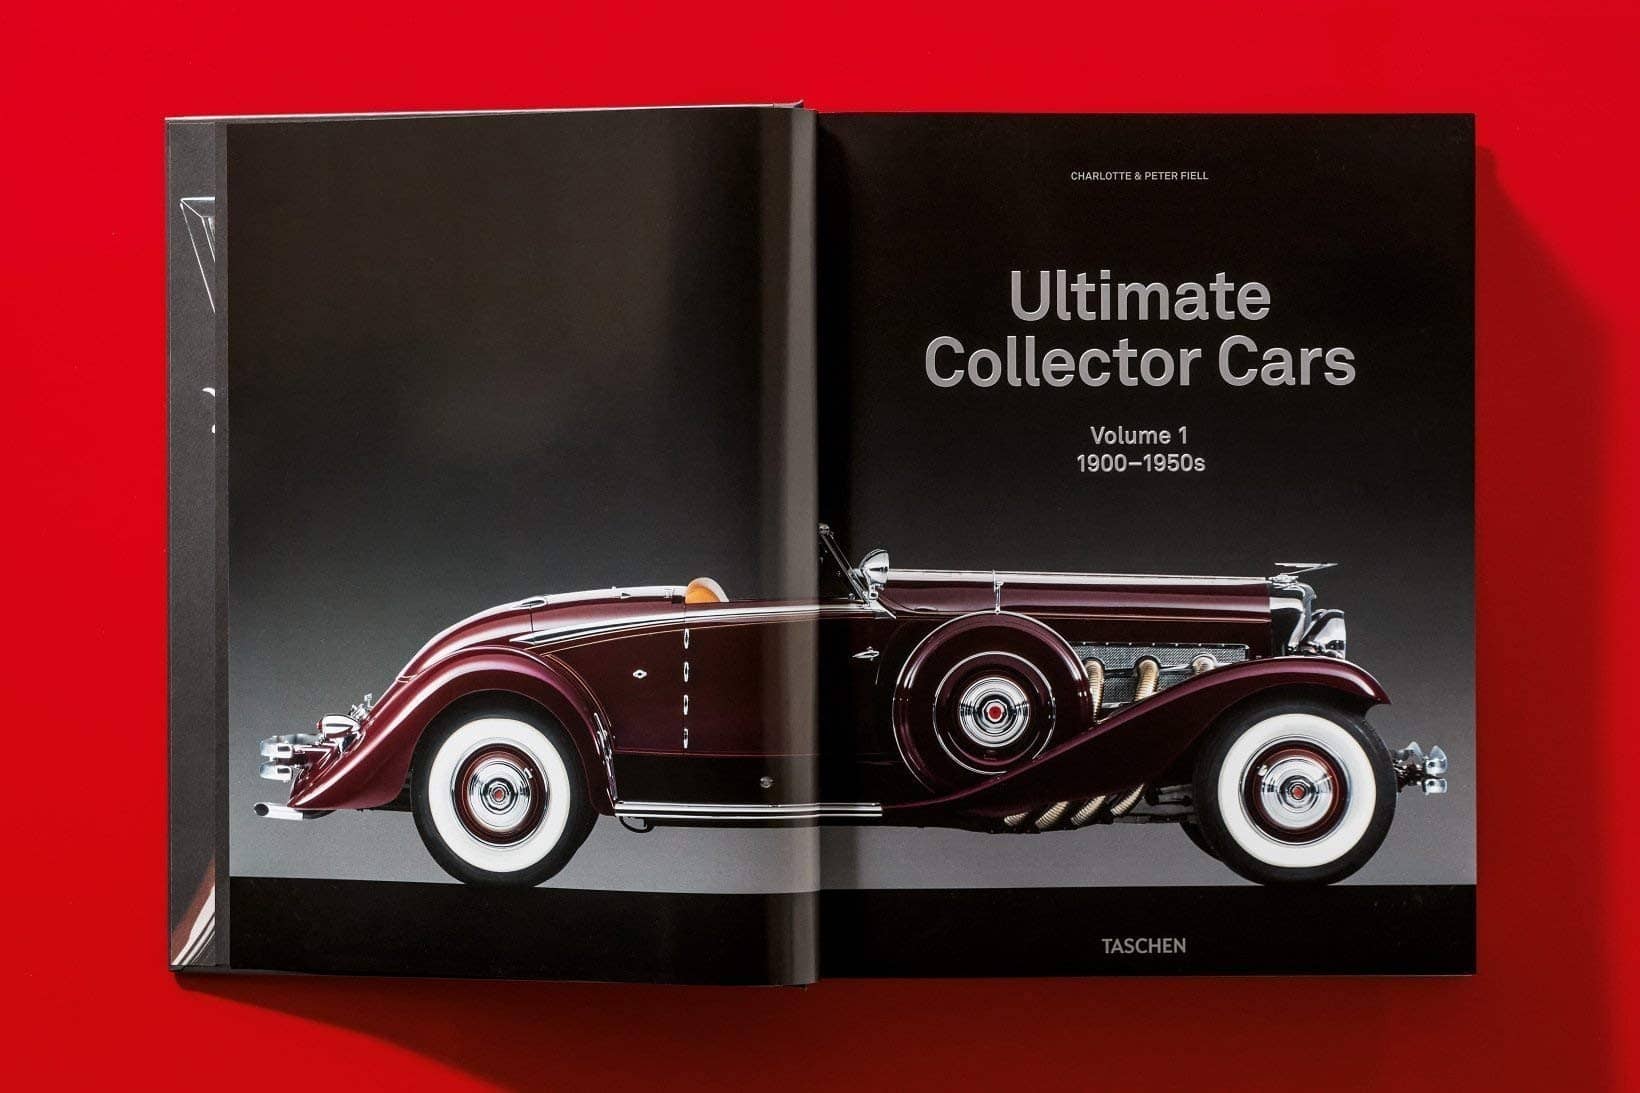 4401-ultimate-collector-cars-71pzdzvnh6l-jpg-71pzdzvnh6l